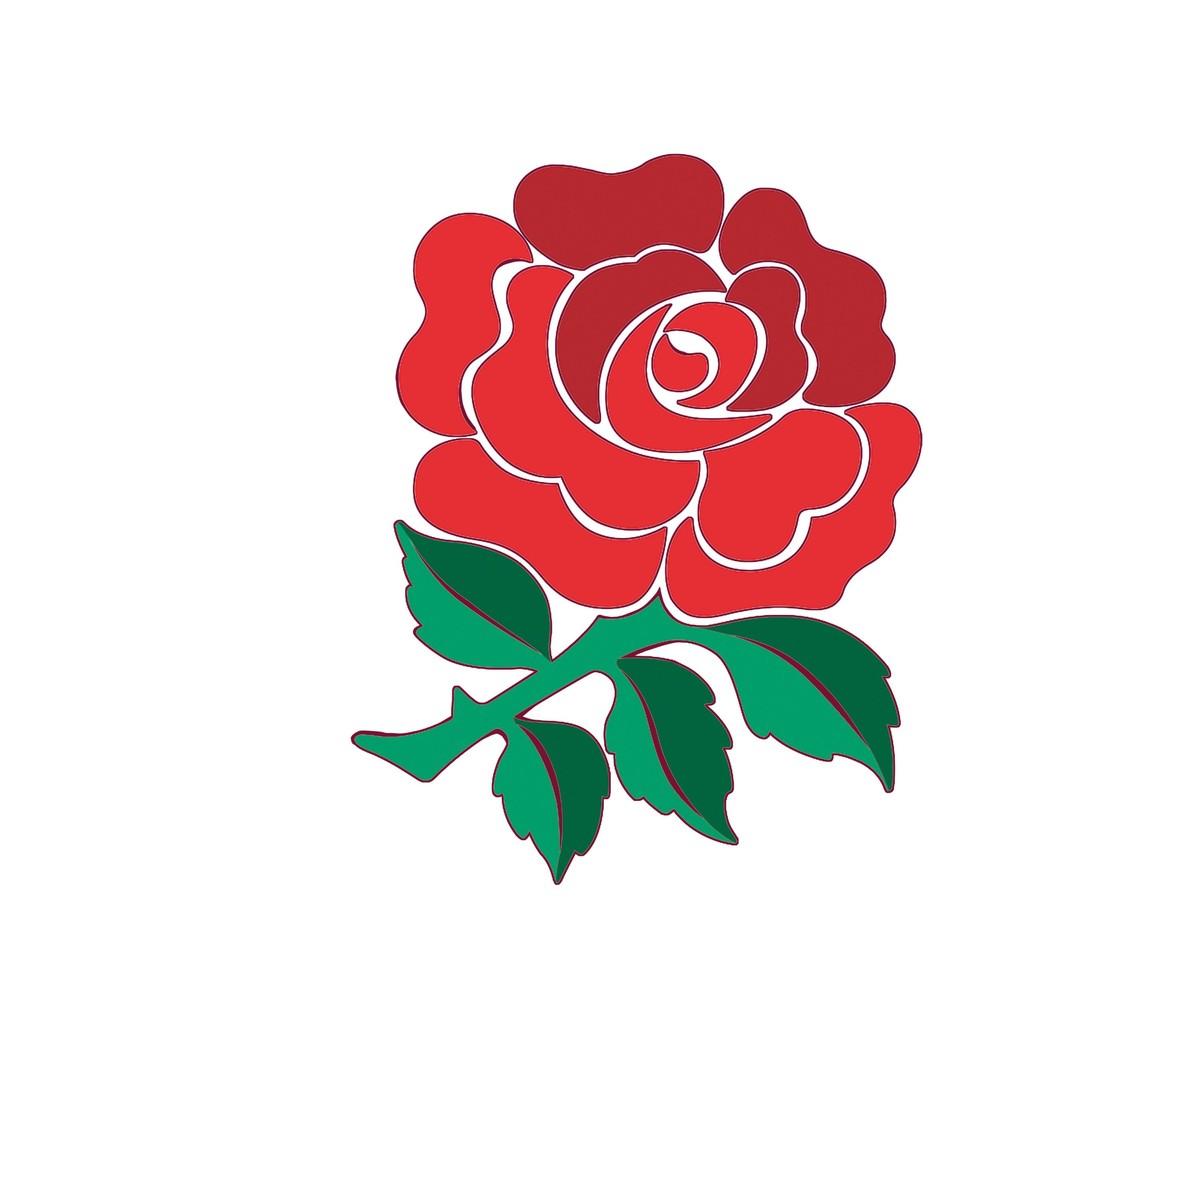 Rugby team emblem, a rose